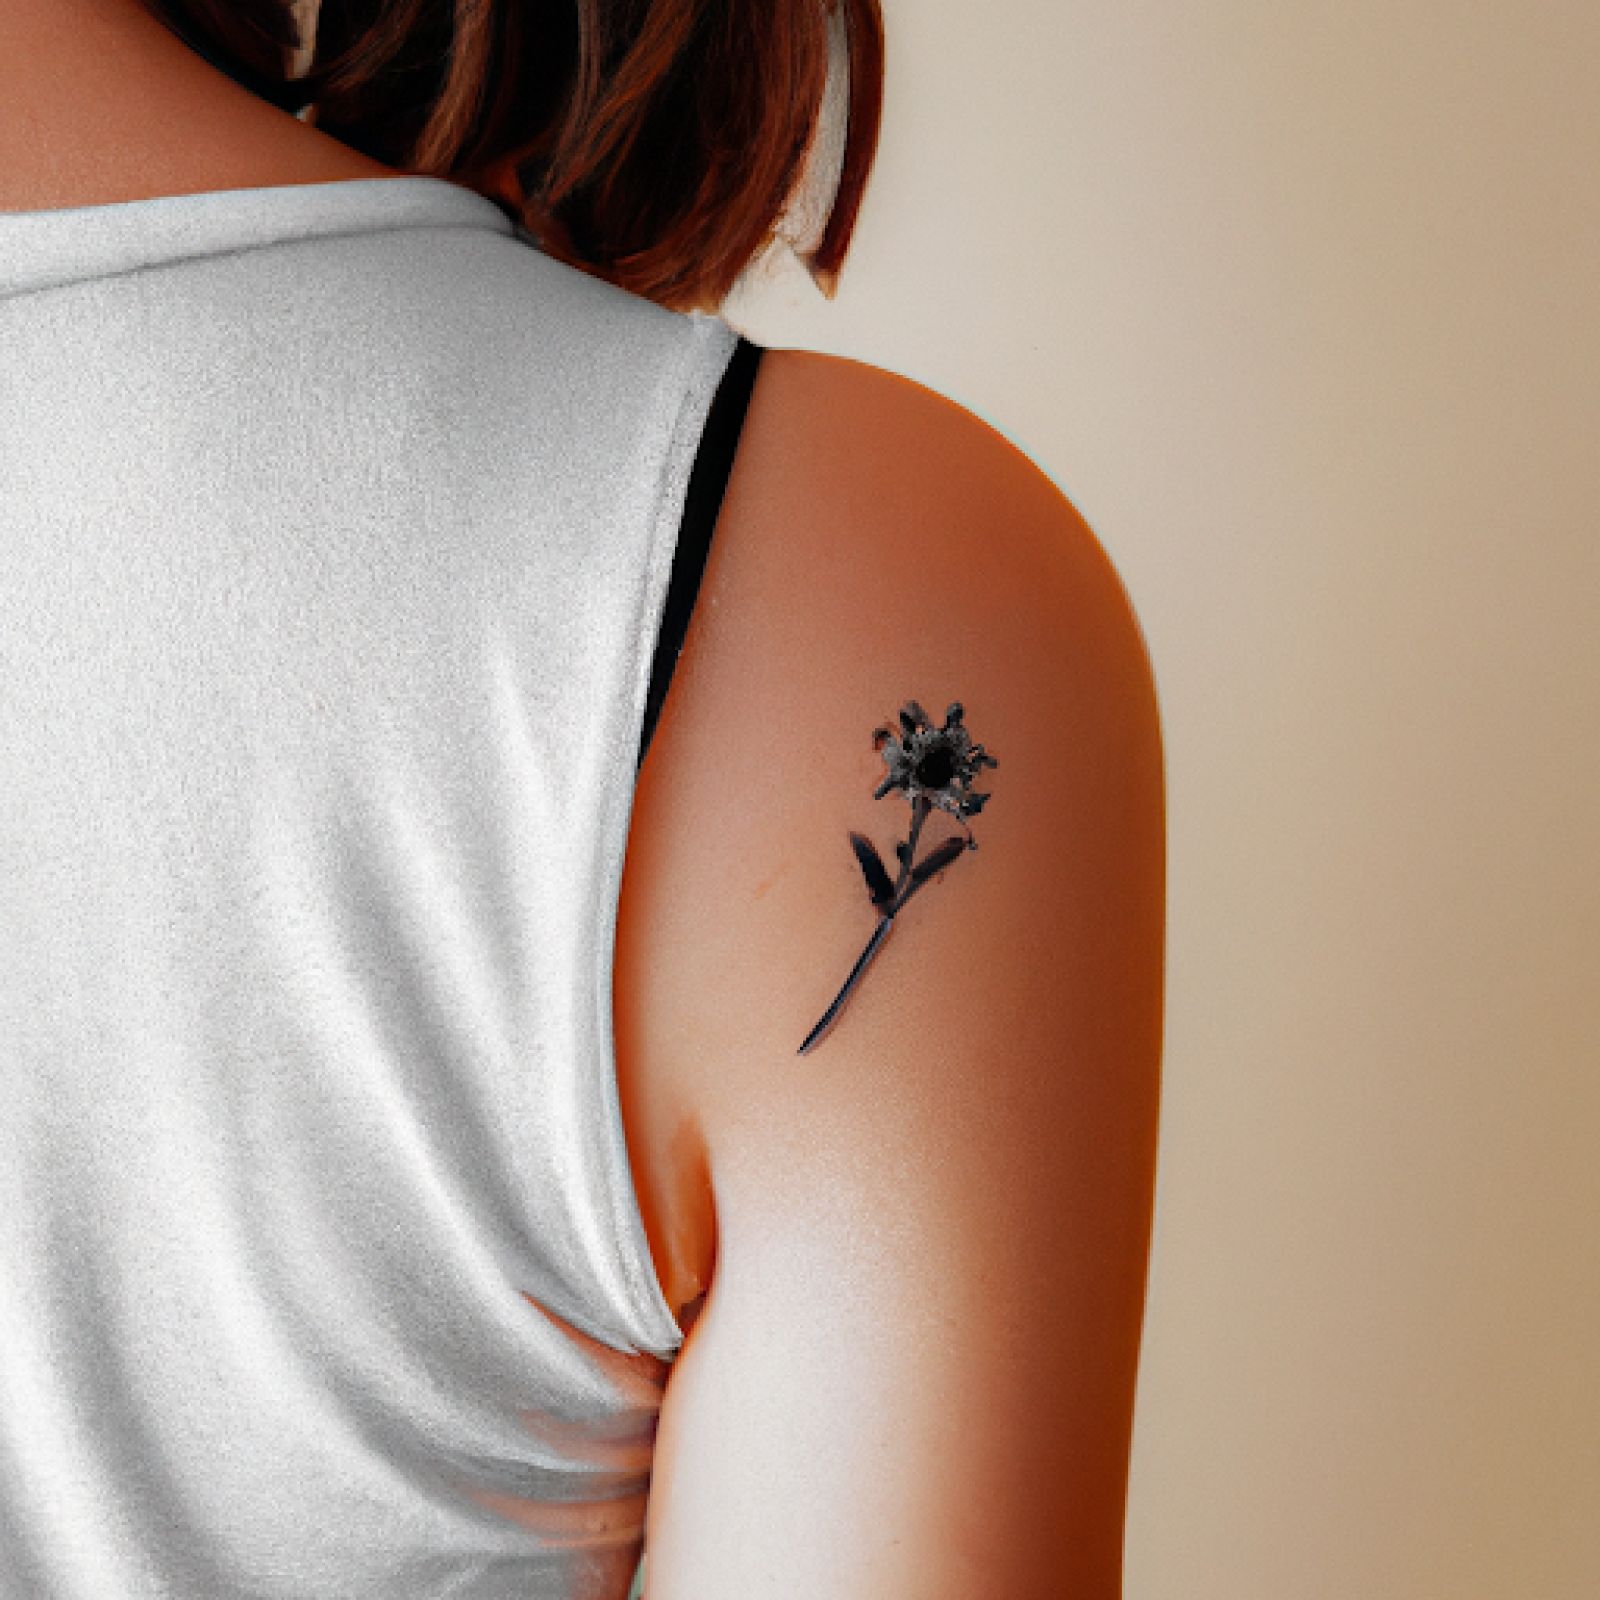 Flower tattoo on side for women